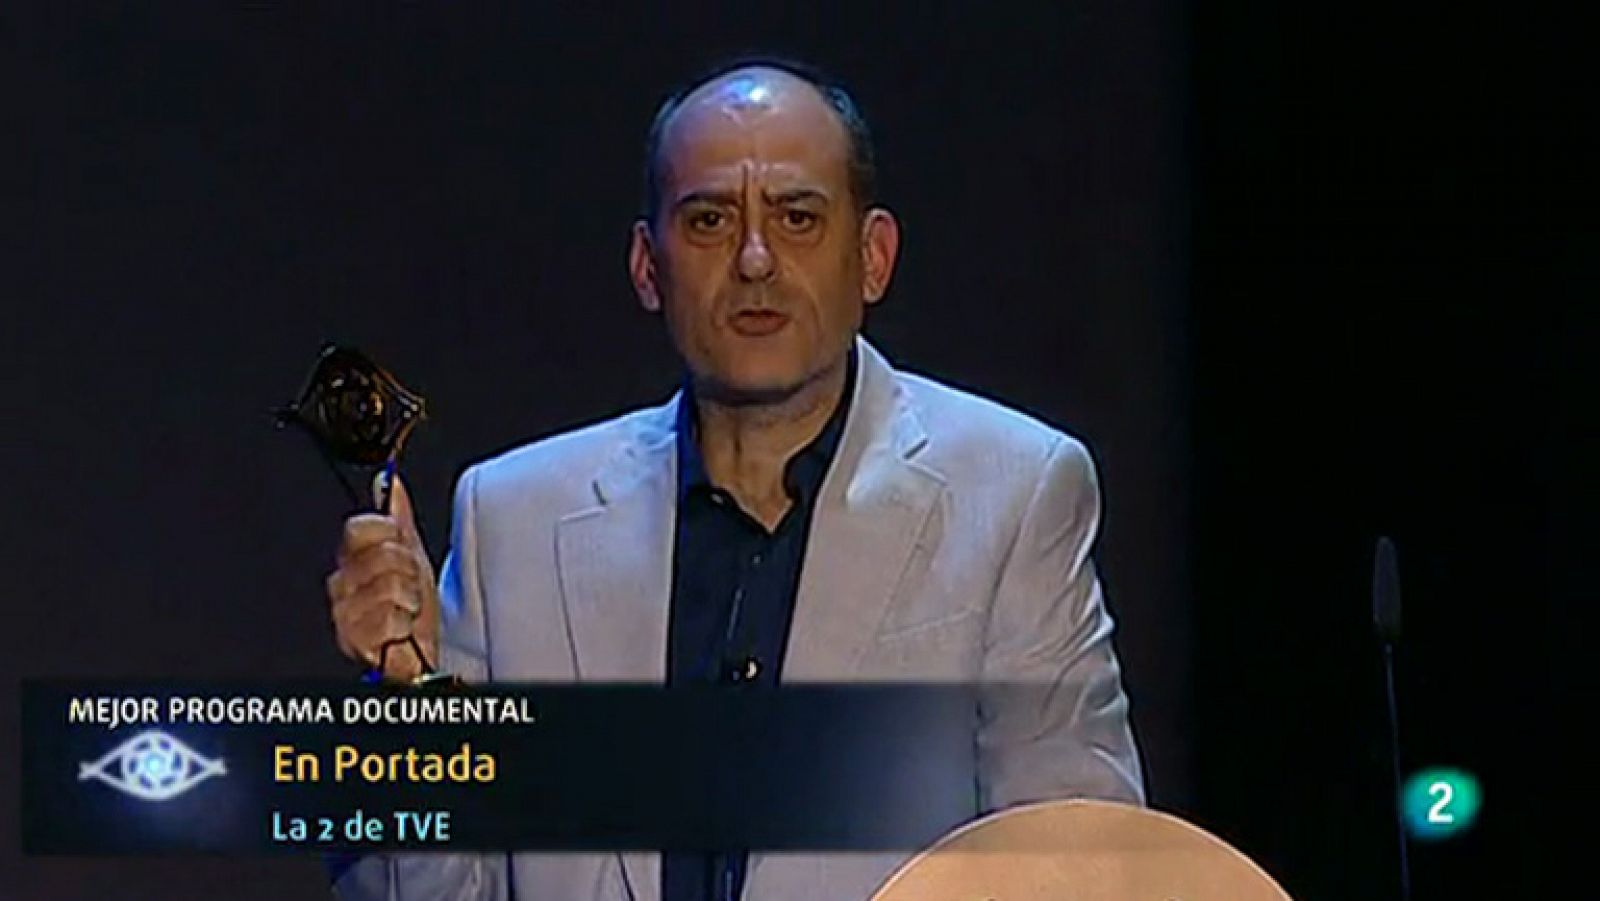 'En Portada', premio Iris al mejor programa documental por segundo año consecutivo